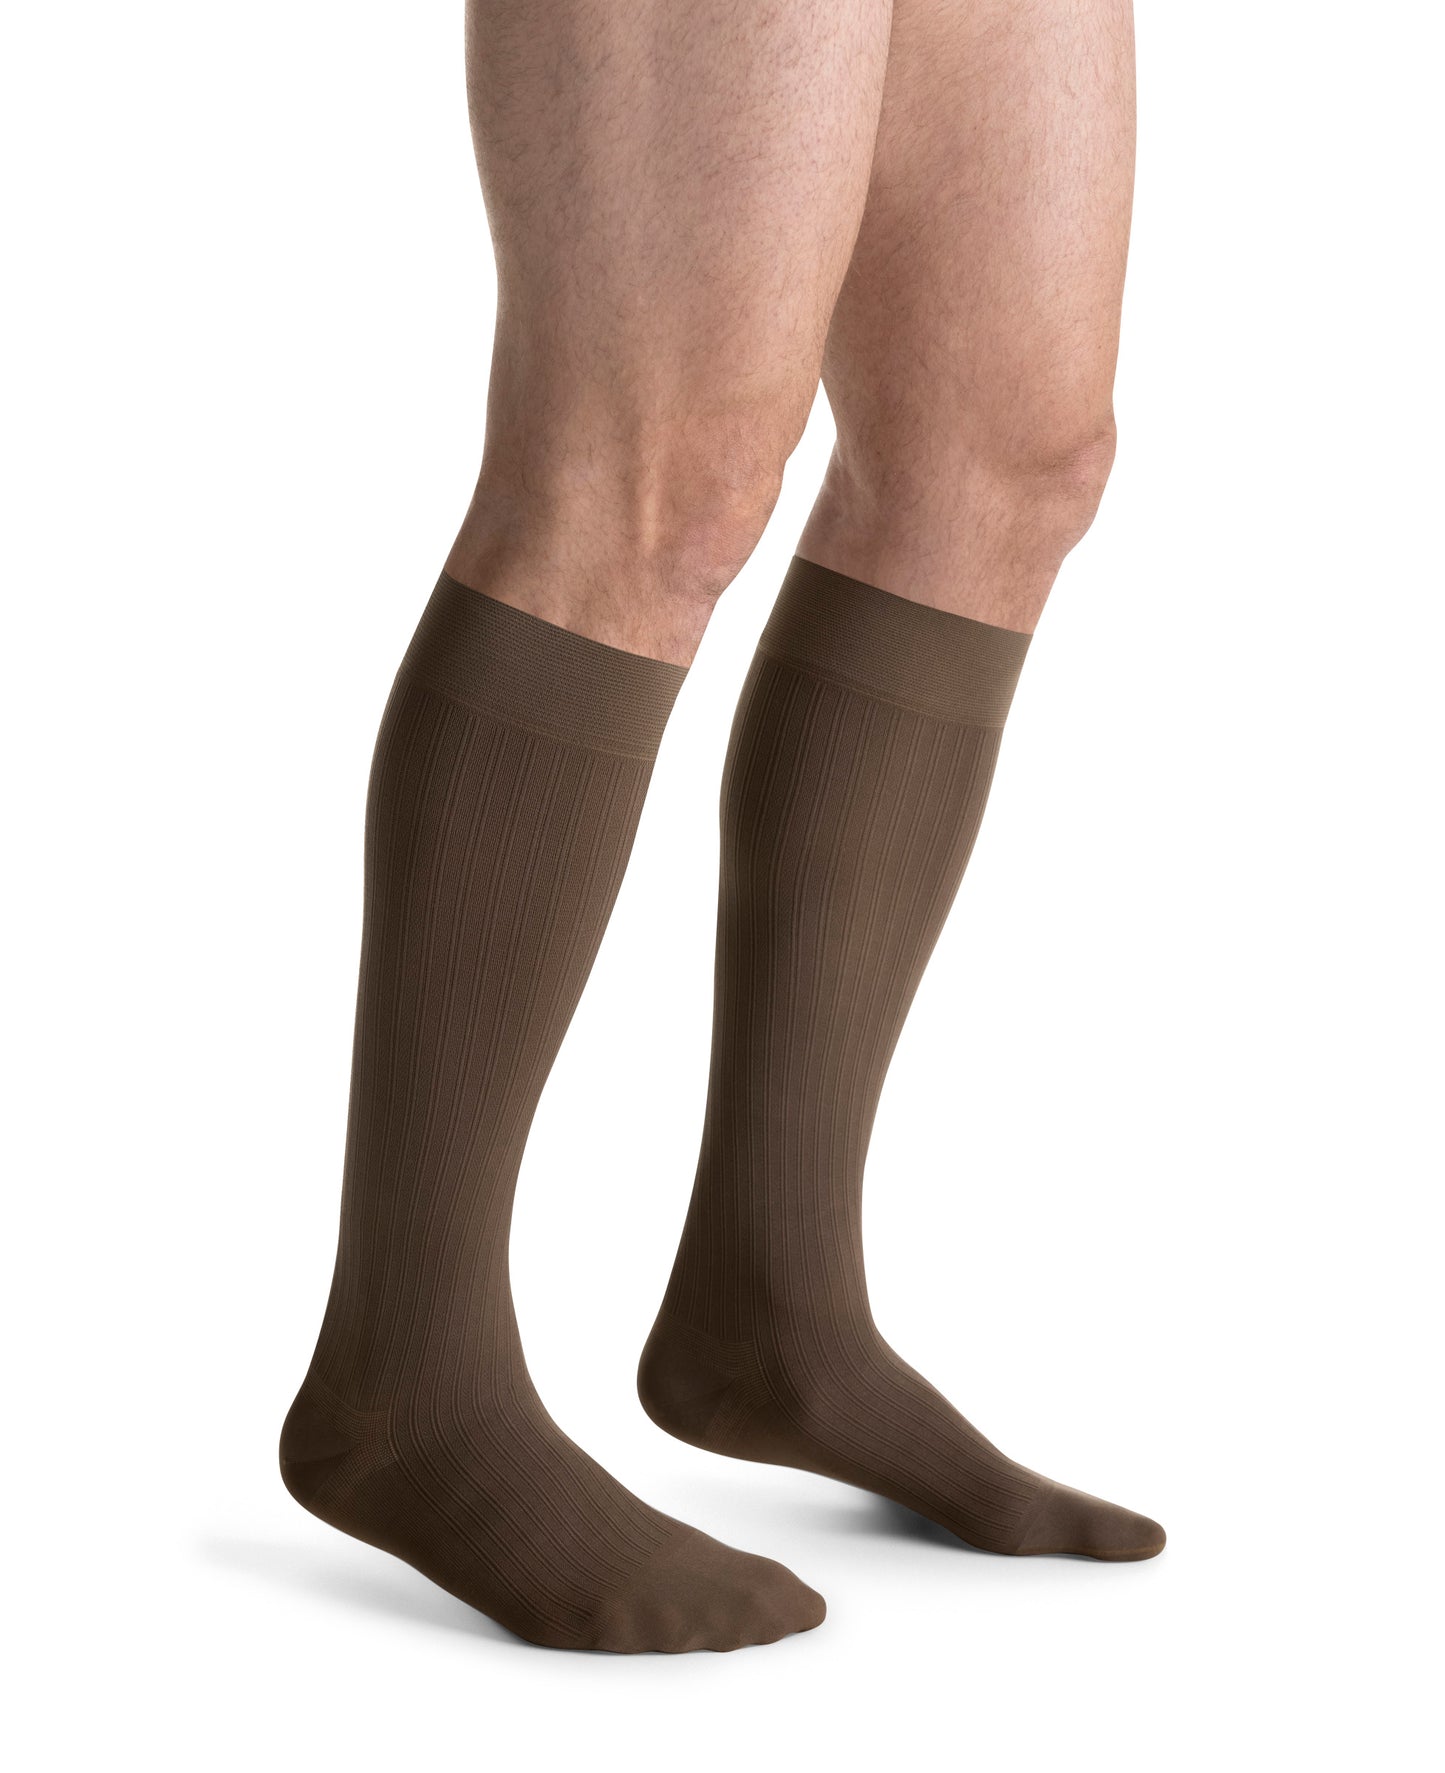 JOBST forMen Ambition Compression Socks 15-20 mmHg Knee High SoftFit Band Closed Toe